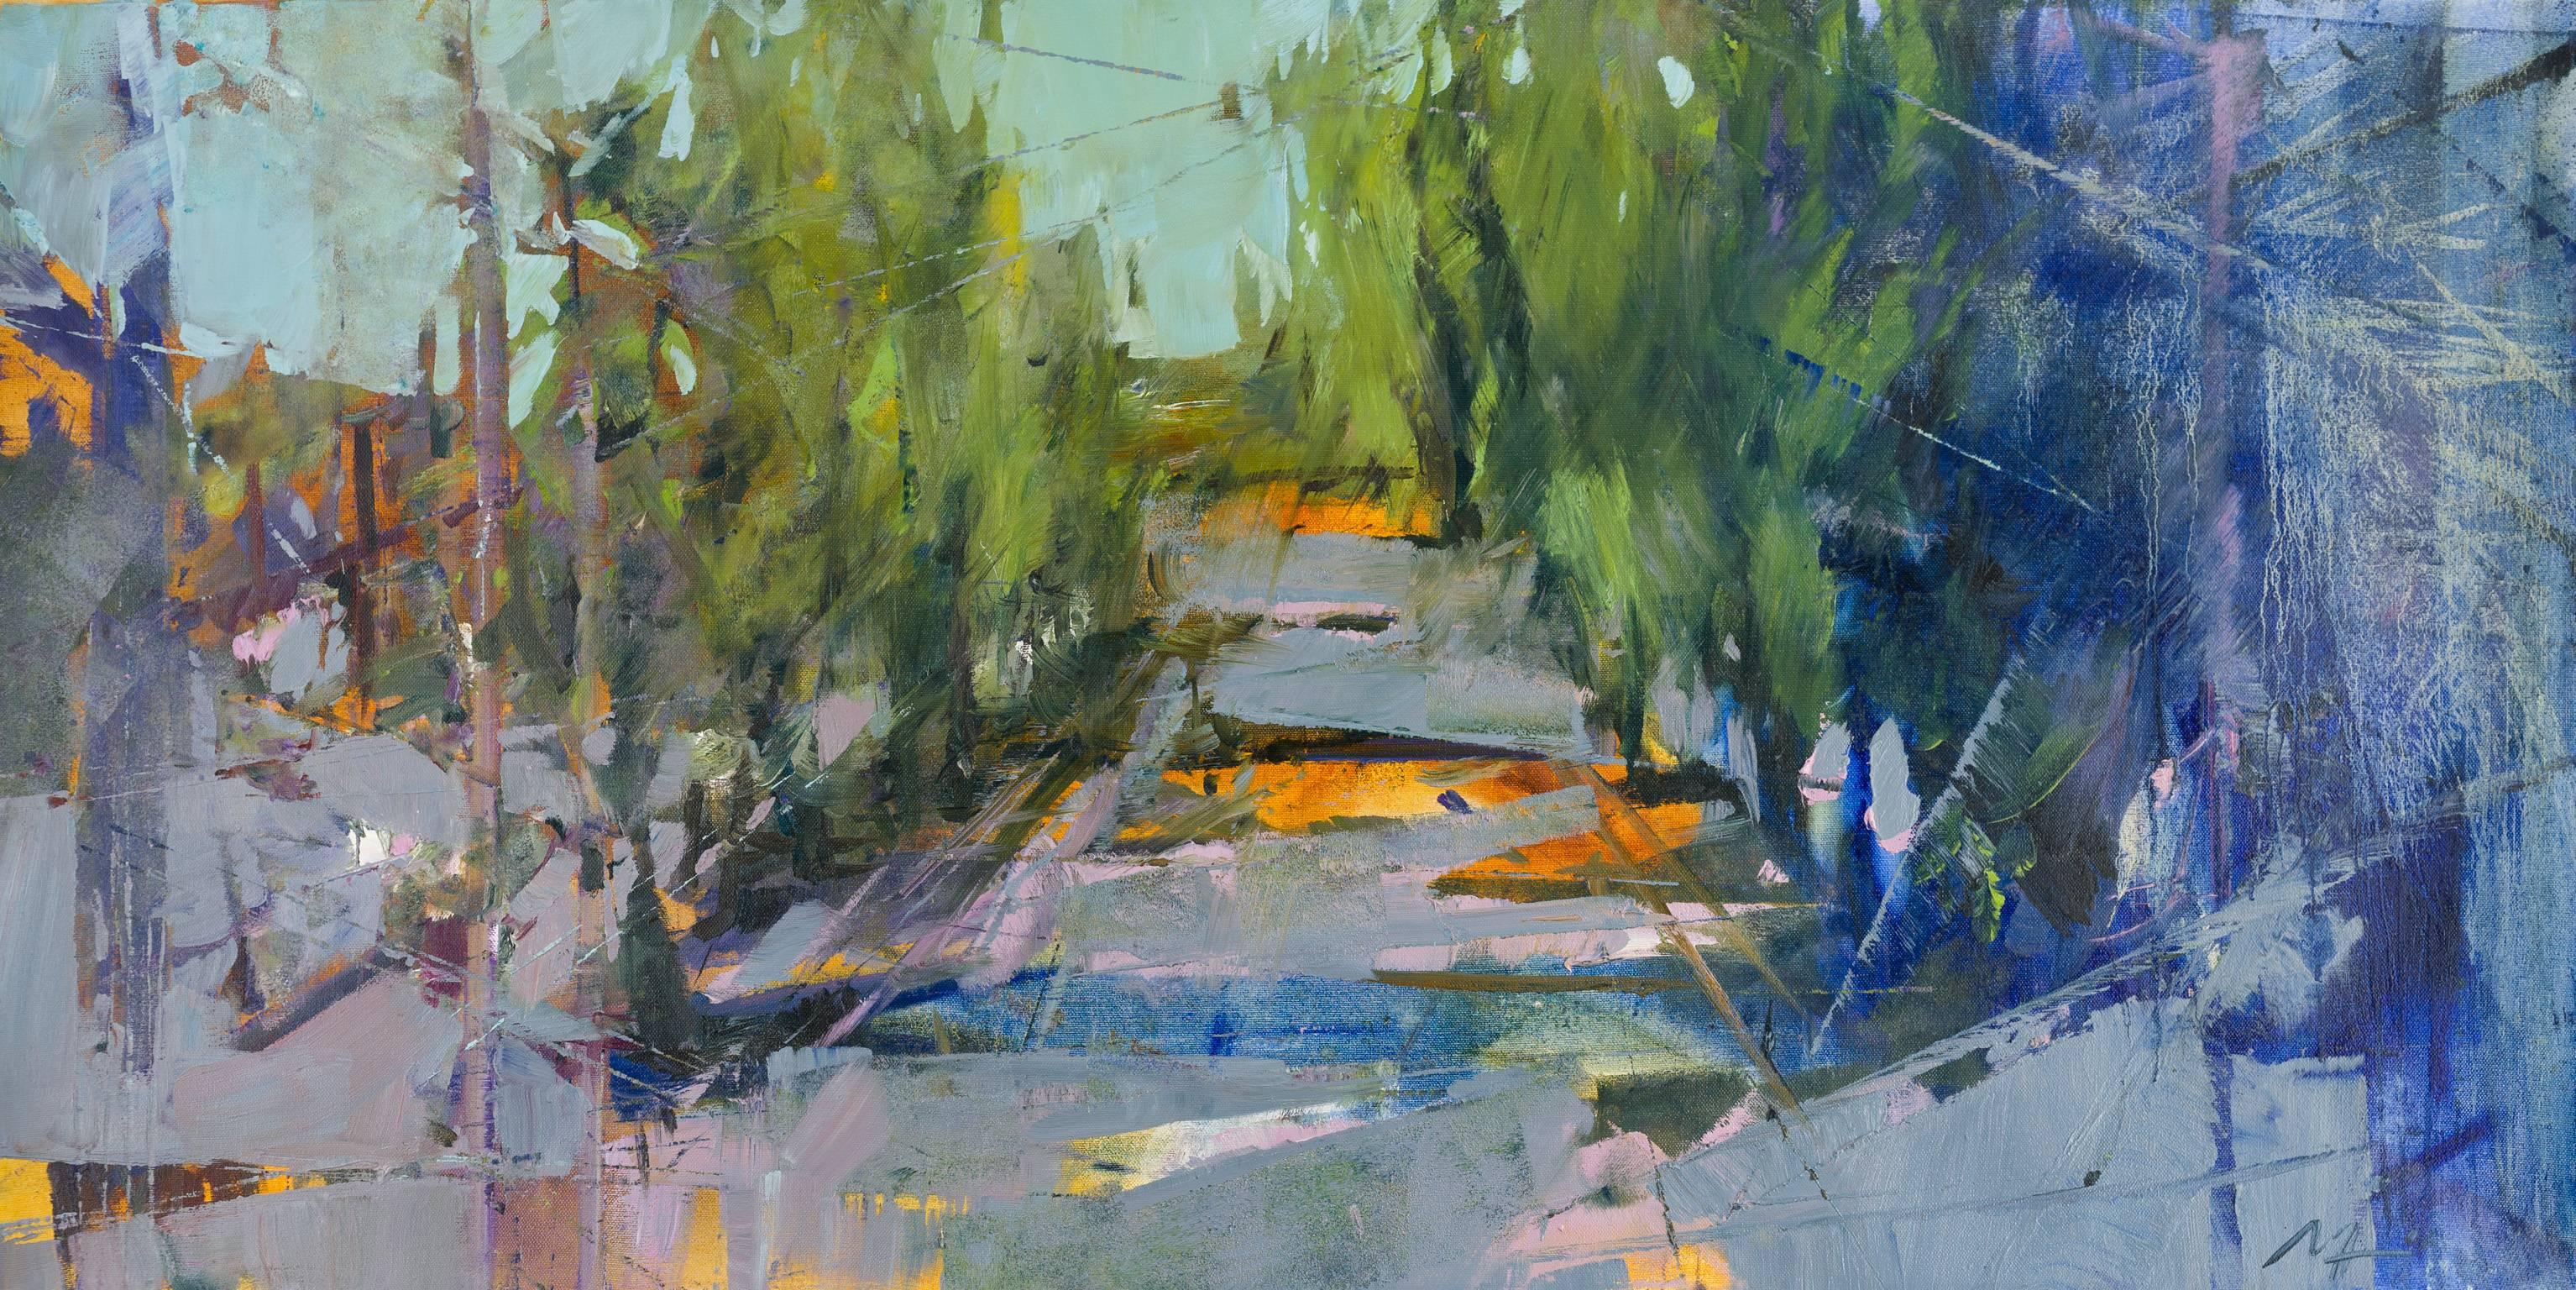 Boulevard - Painting by Alina Maksimenko